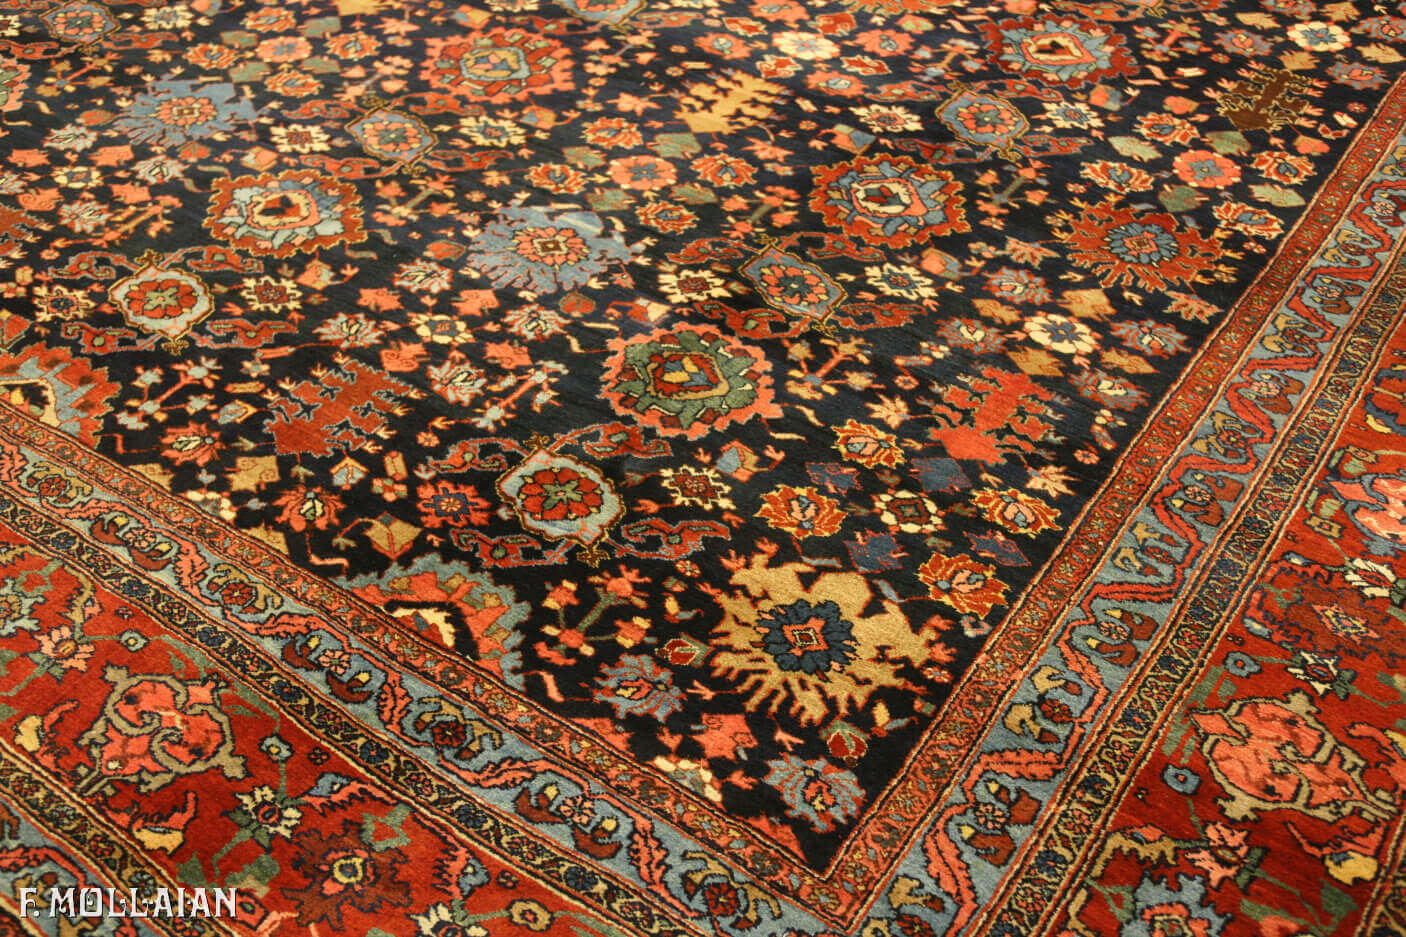 A Larg Antique Persian Bijar (Bidjar) Carpet n°:57847487